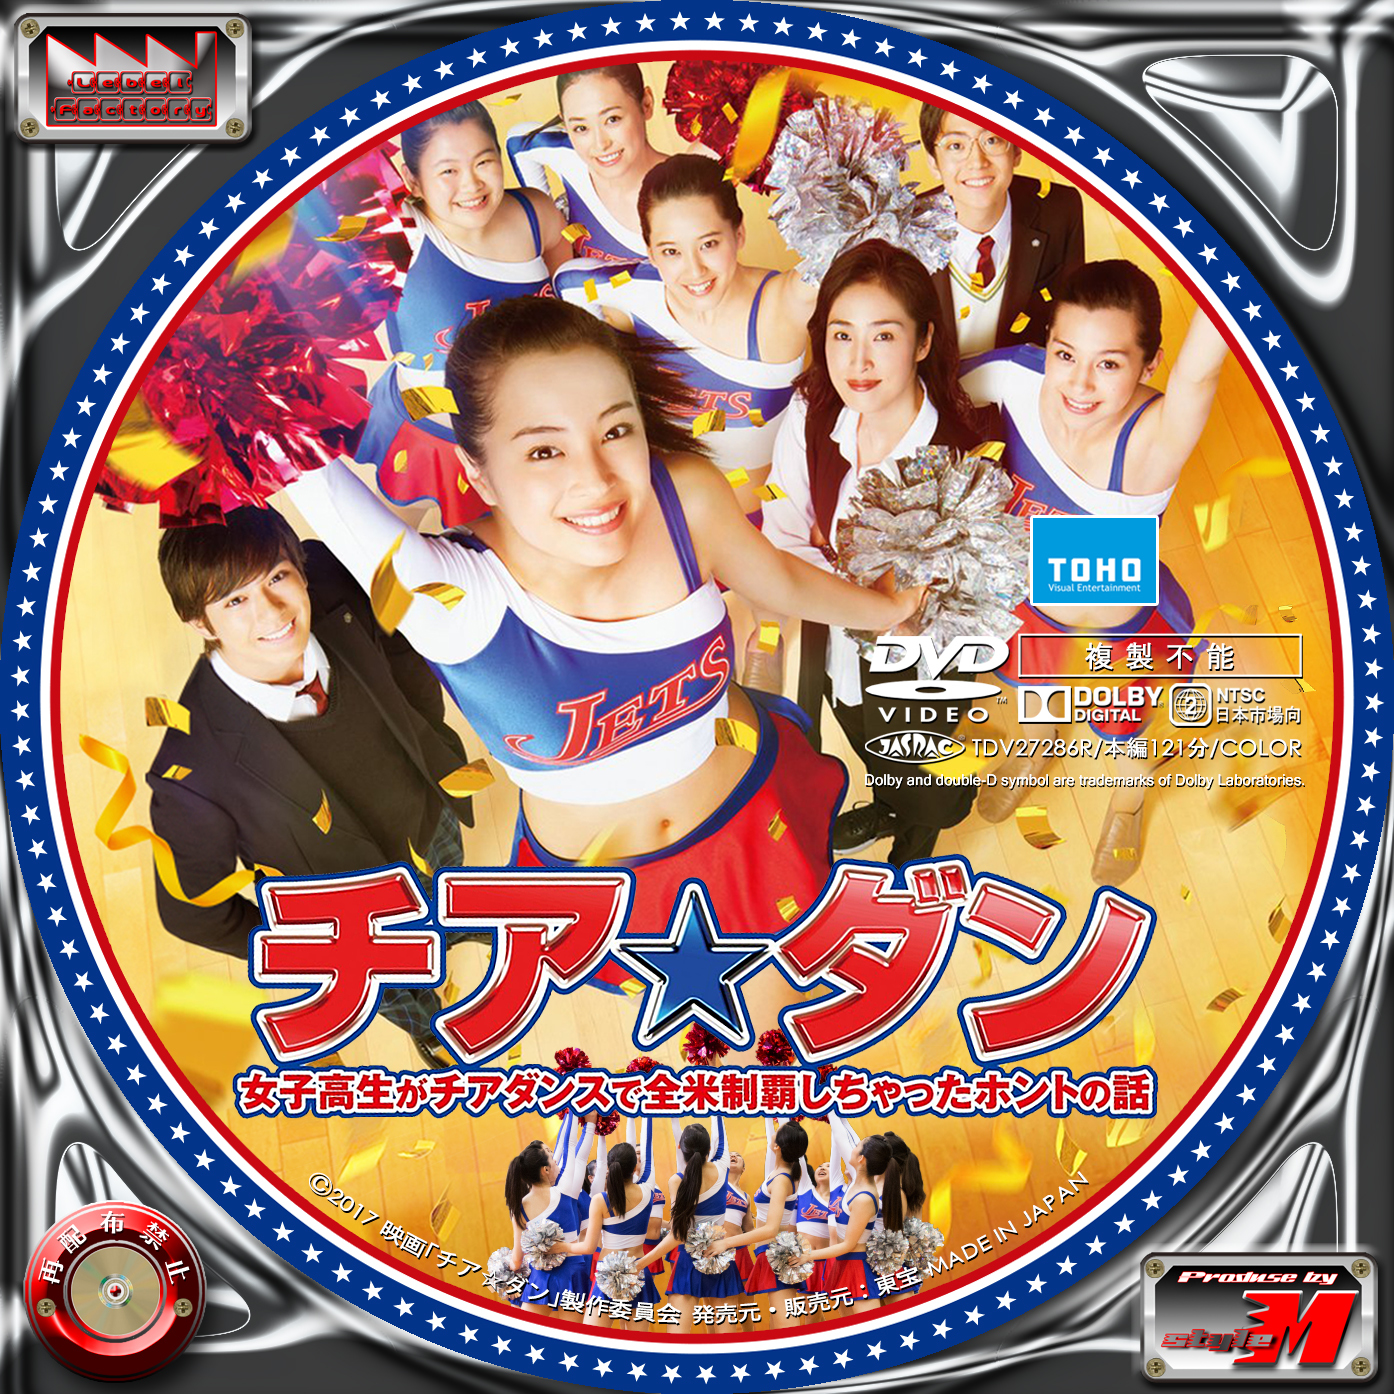 Label Factory - M style - ＜自作DVD・Blu-rayレーベル（ラベル）＞ チア☆ダン 女子高生がチアダンスで 全米制覇しちゃったホントの話